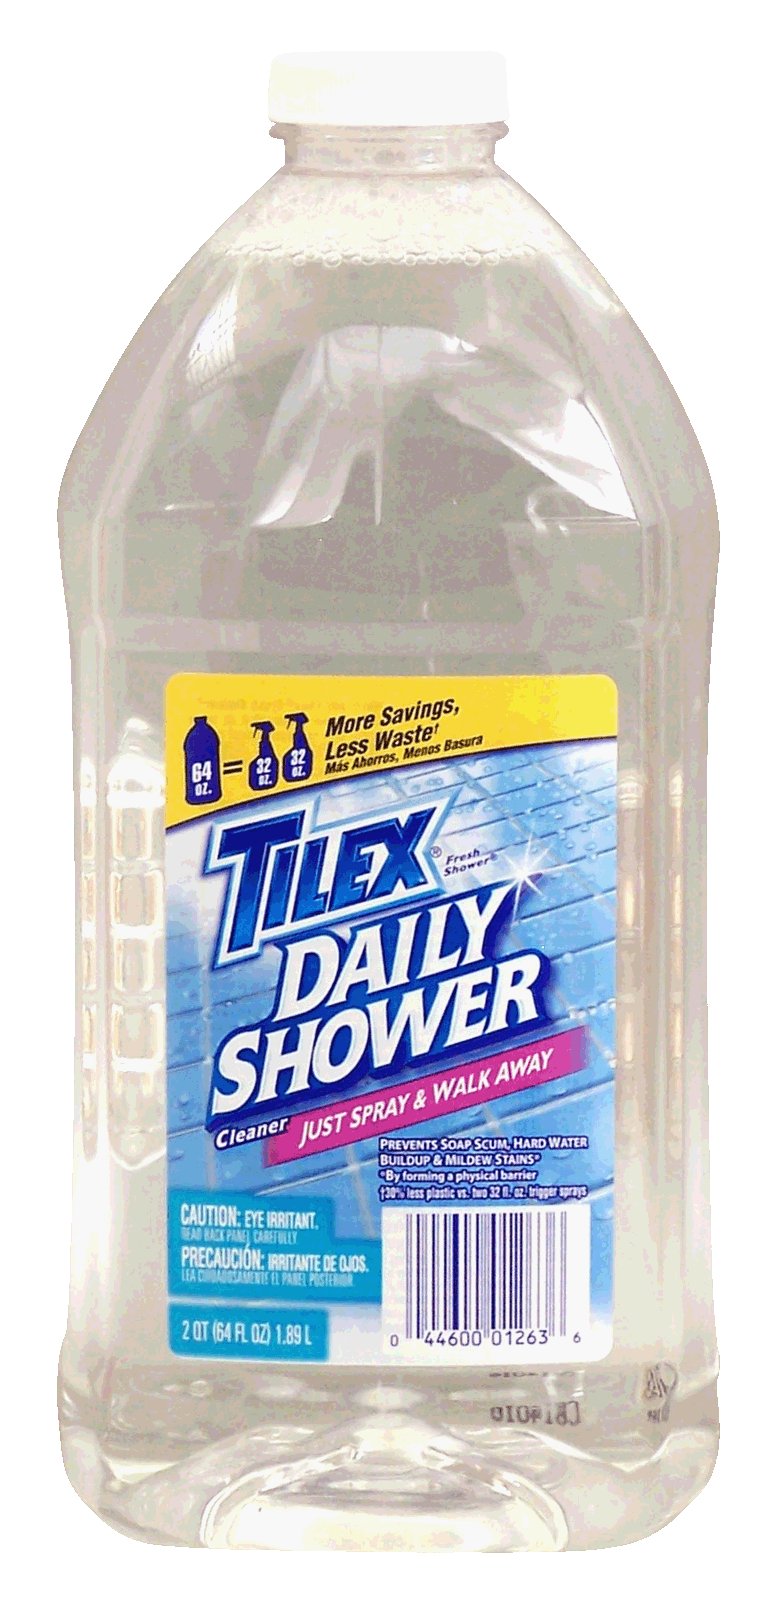 Tilex Tilex daily shower cleaner, refill Full-Size Picture